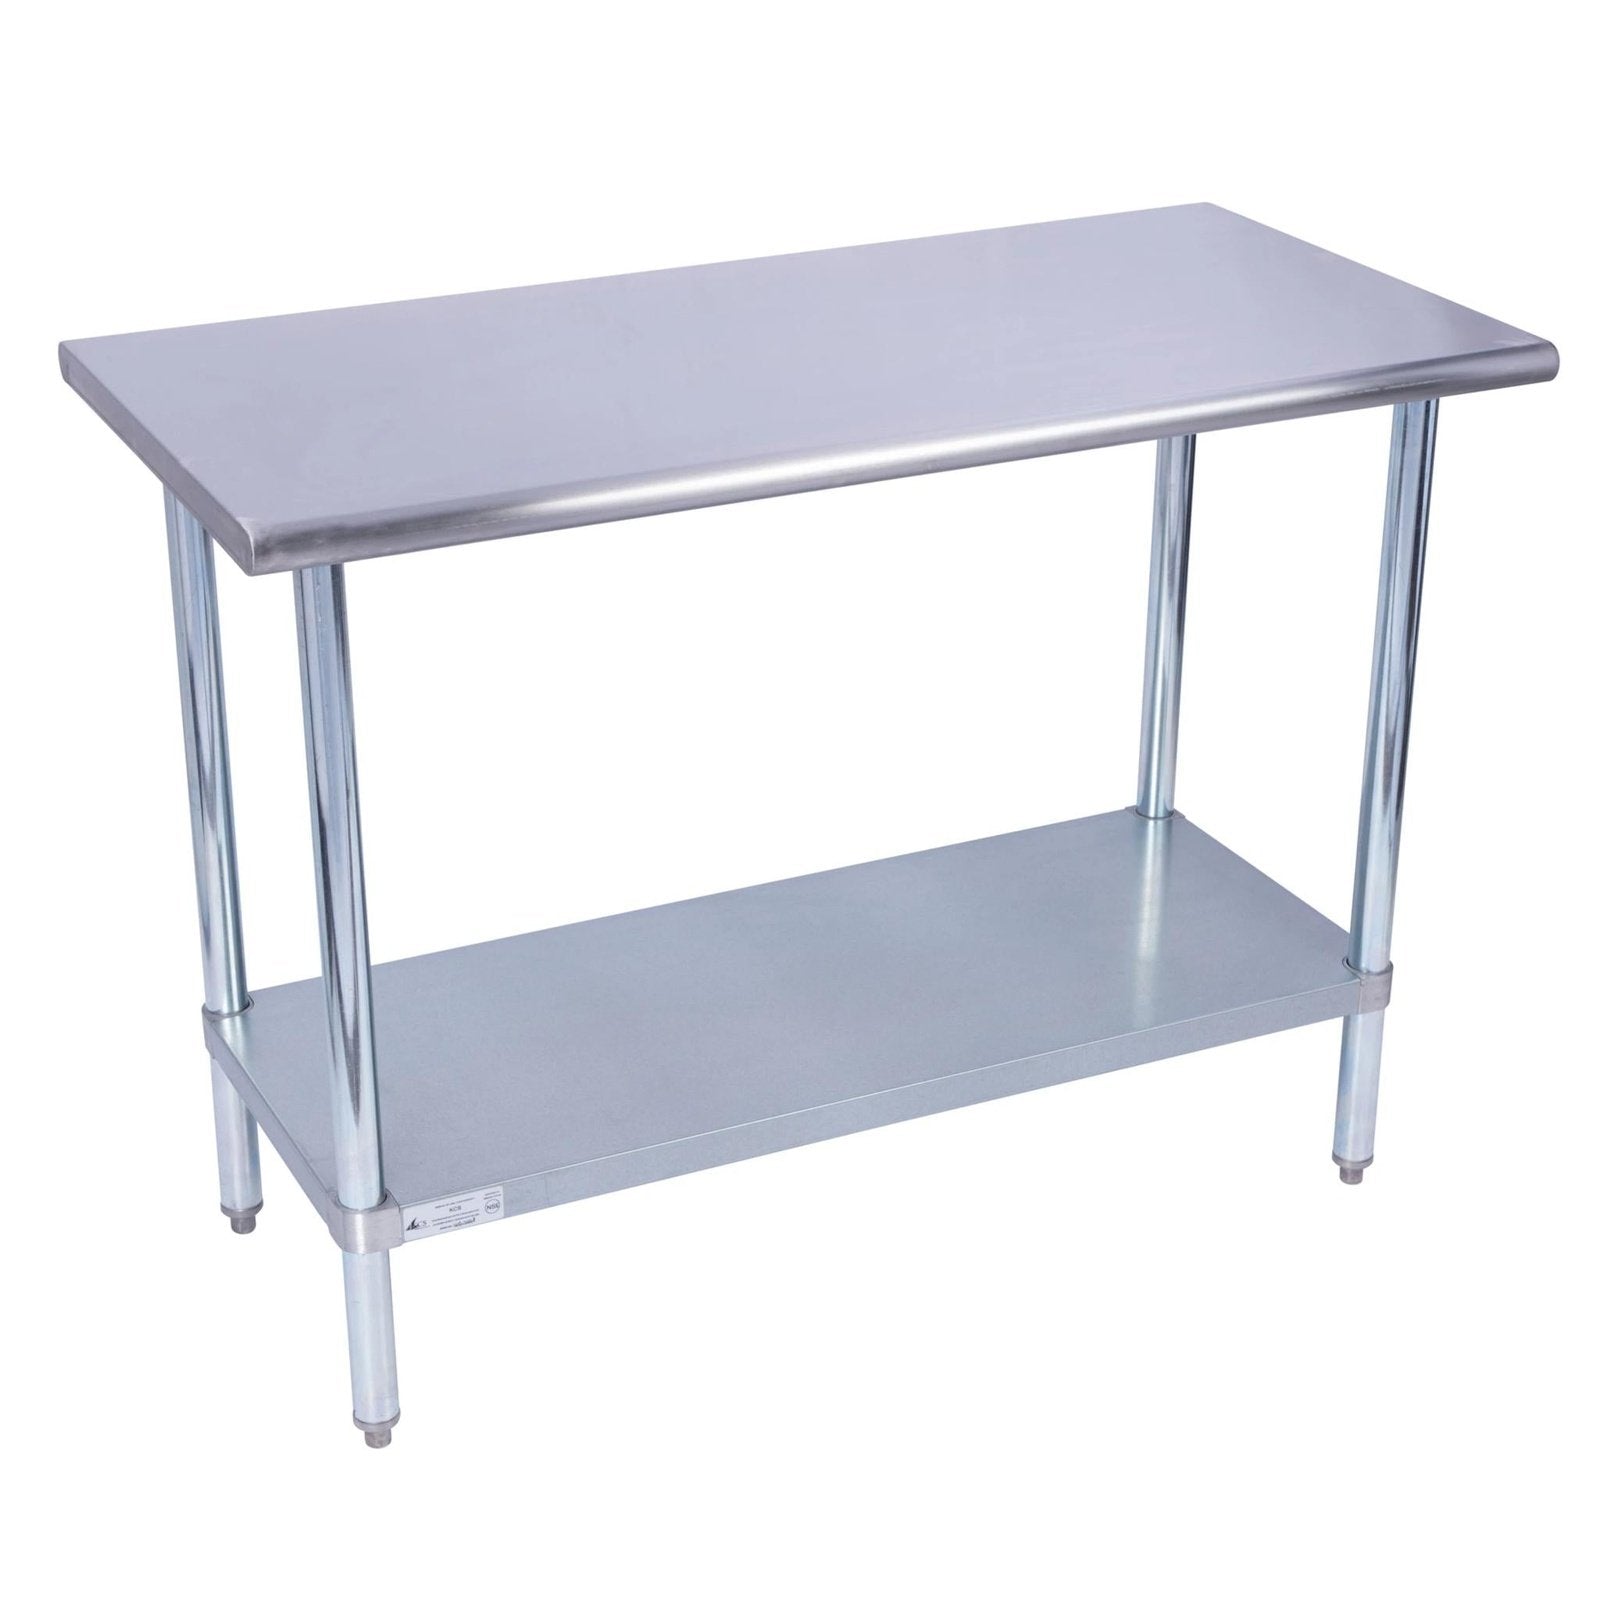 KCS 24″x 96″ Stainless Steel Work Tables with Galvanized Undershelf